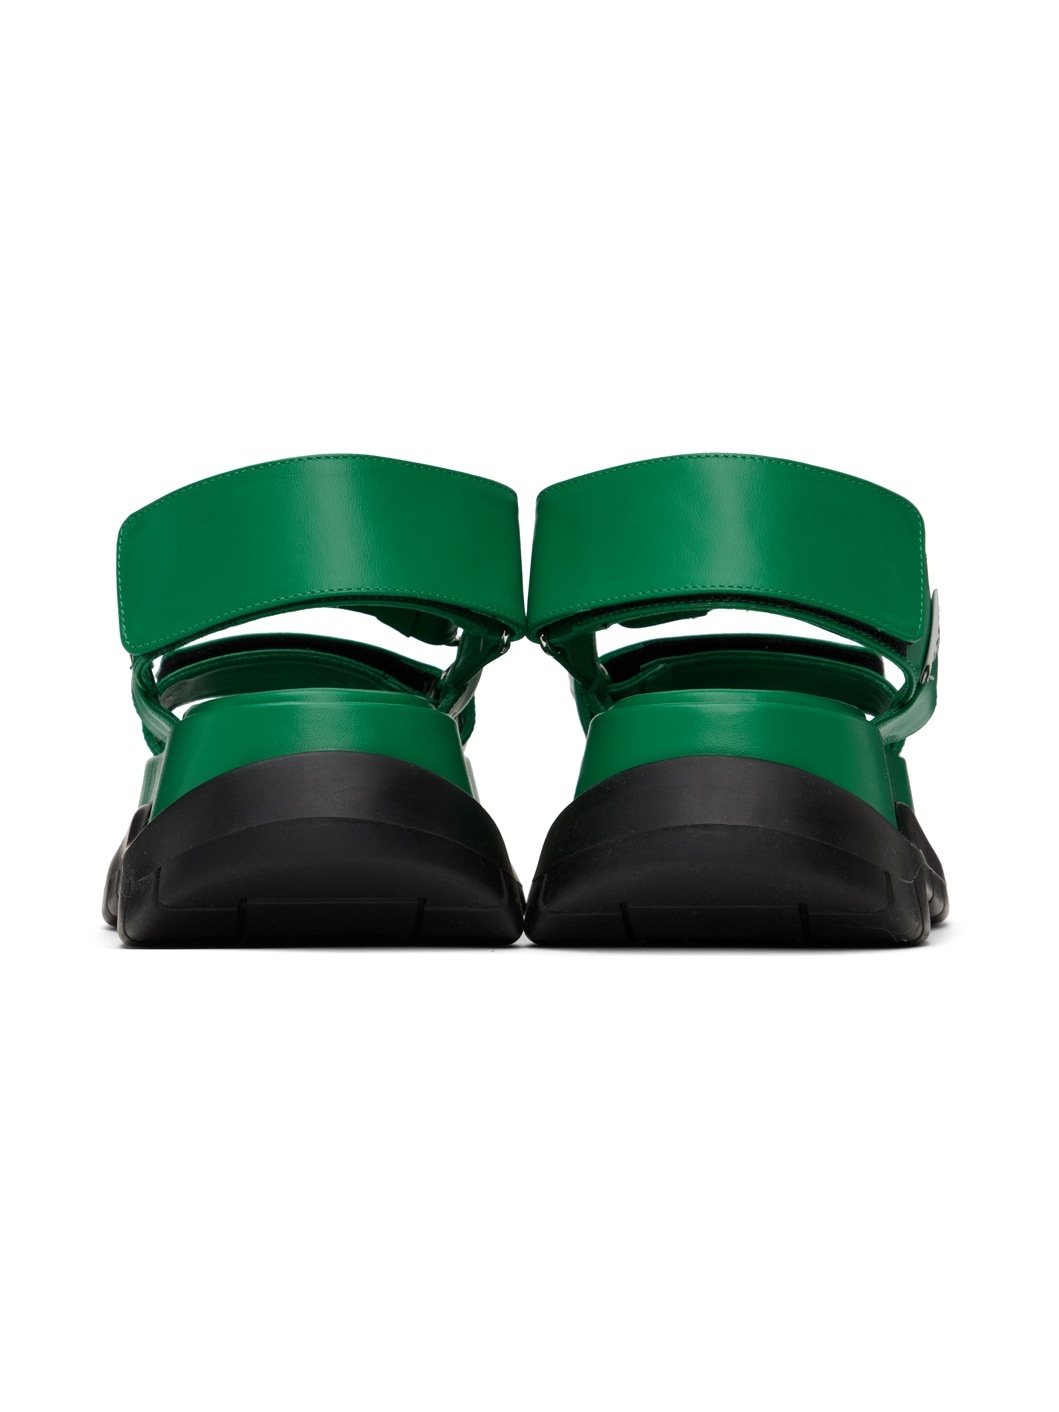 SSENSE Exclusive Green Platform Sandals - 2